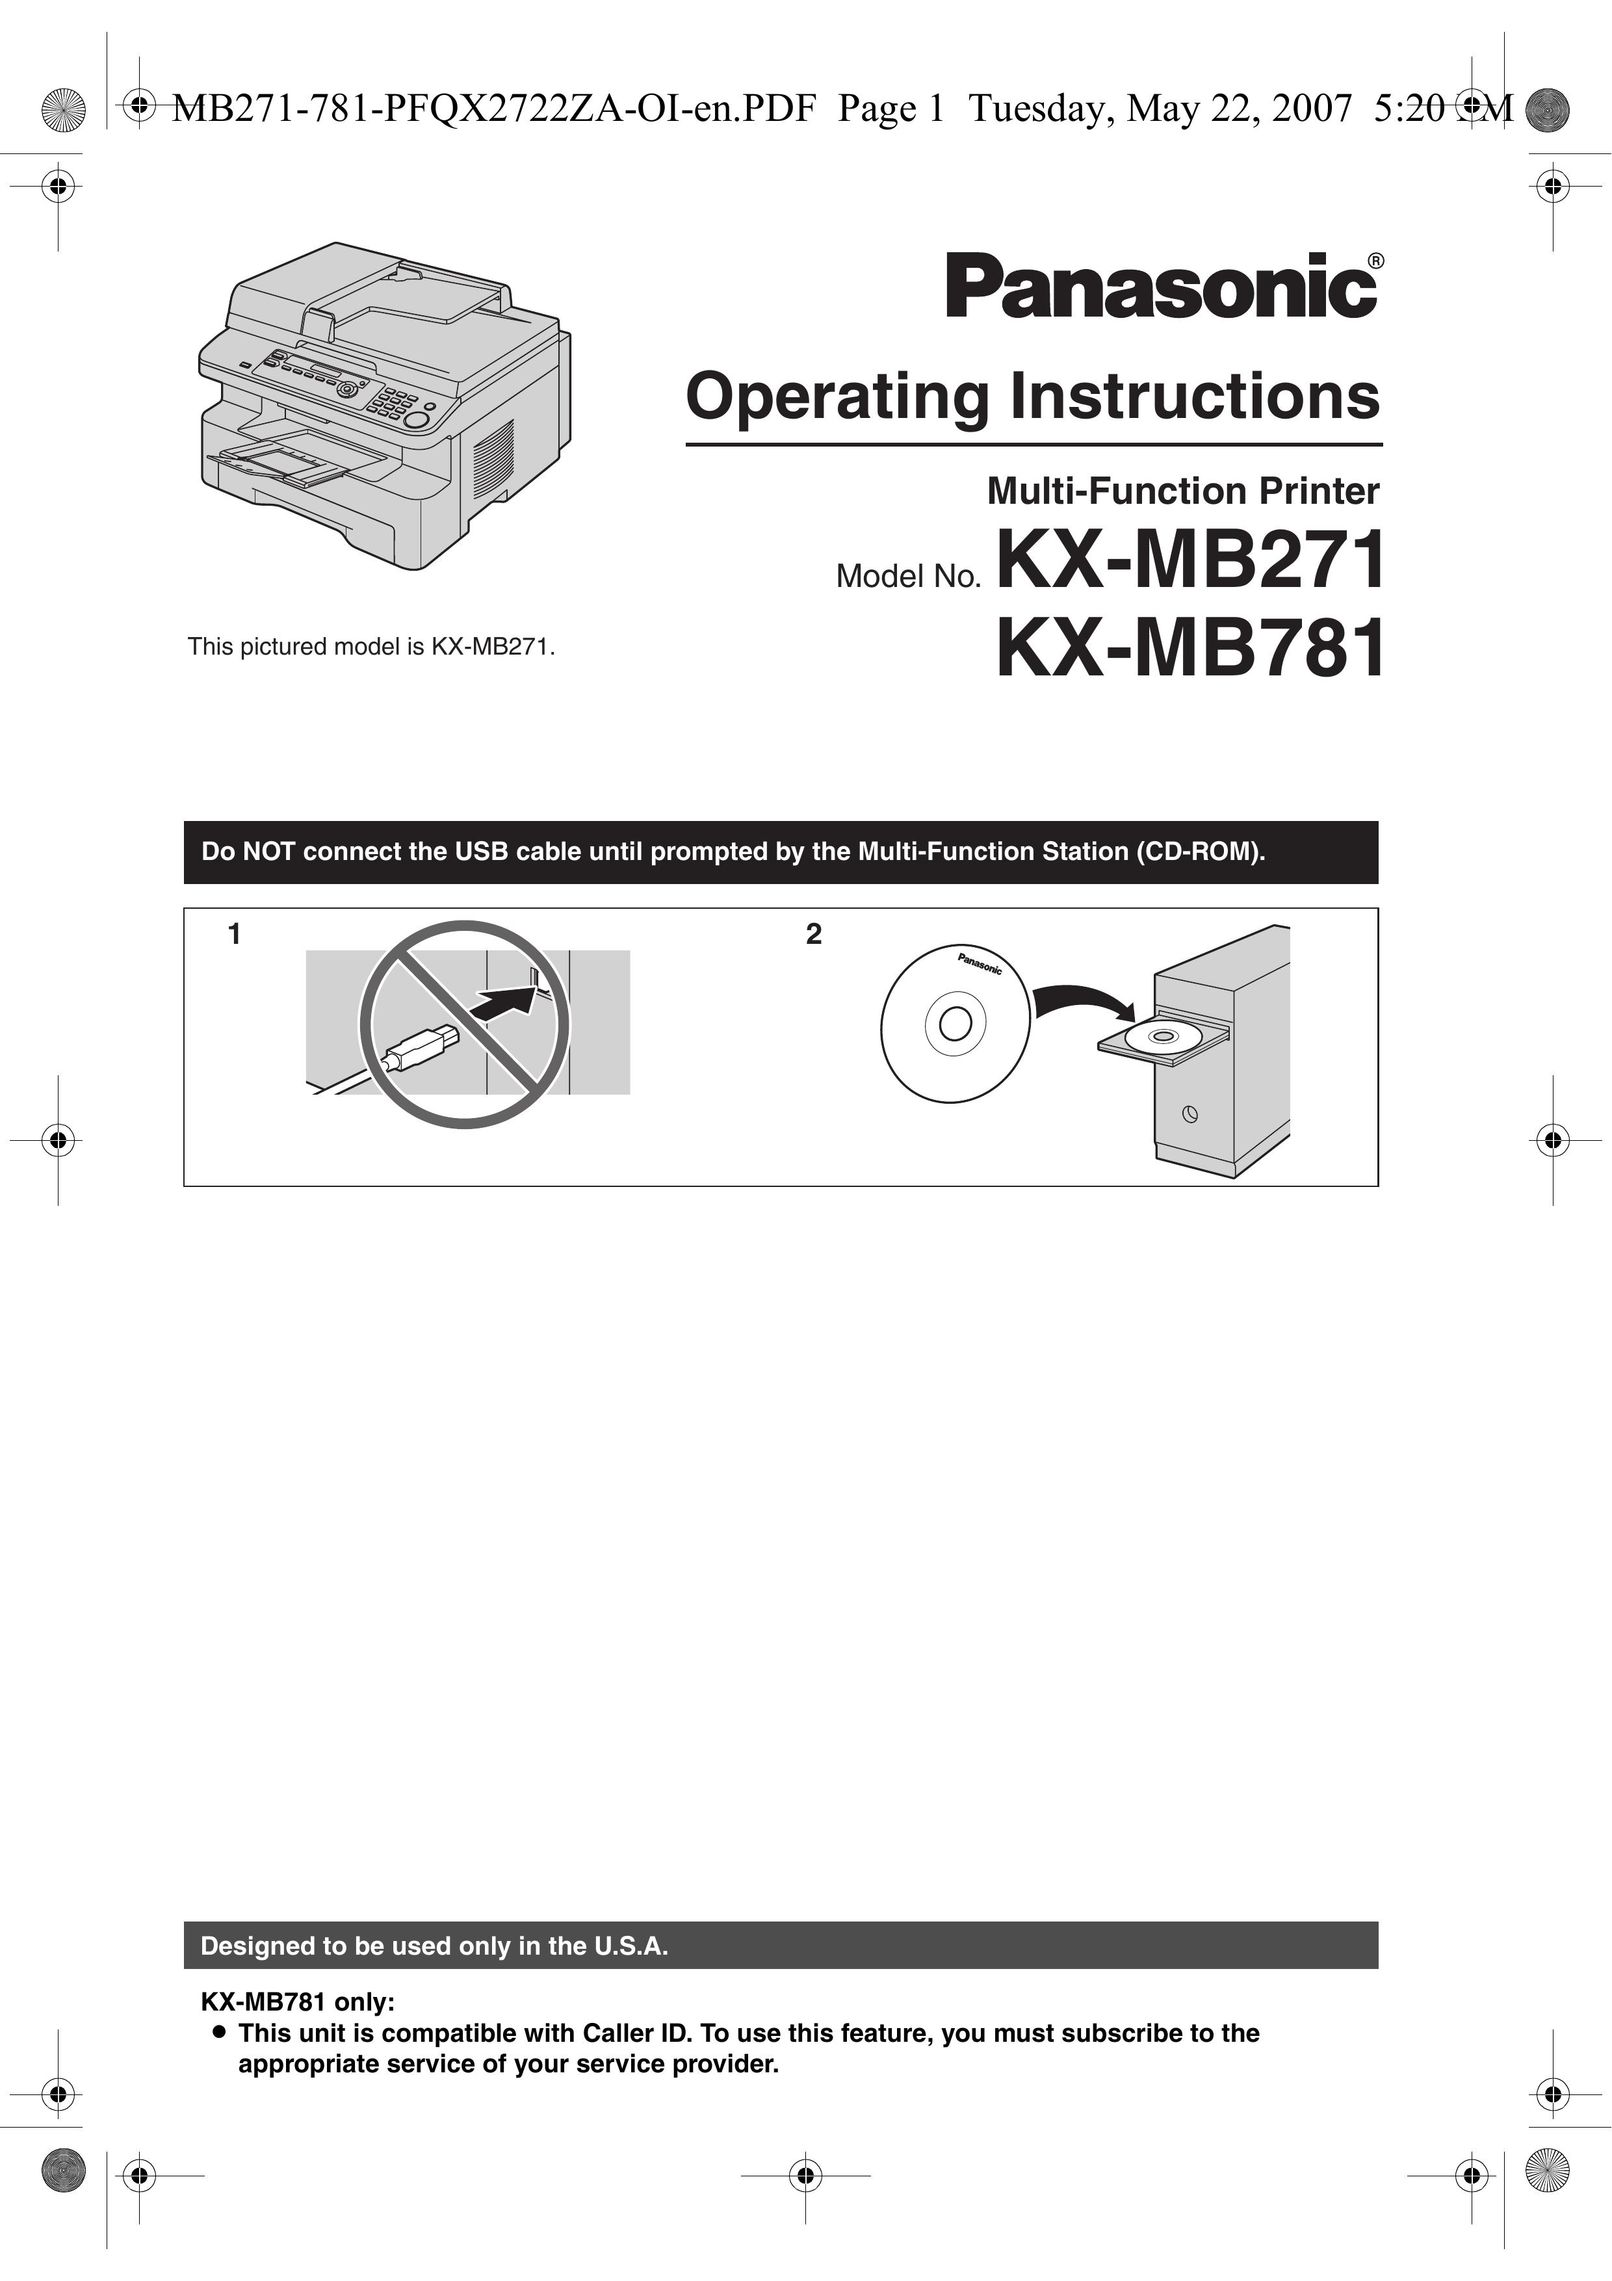 Panasonic KX-MB271 Printer User Manual